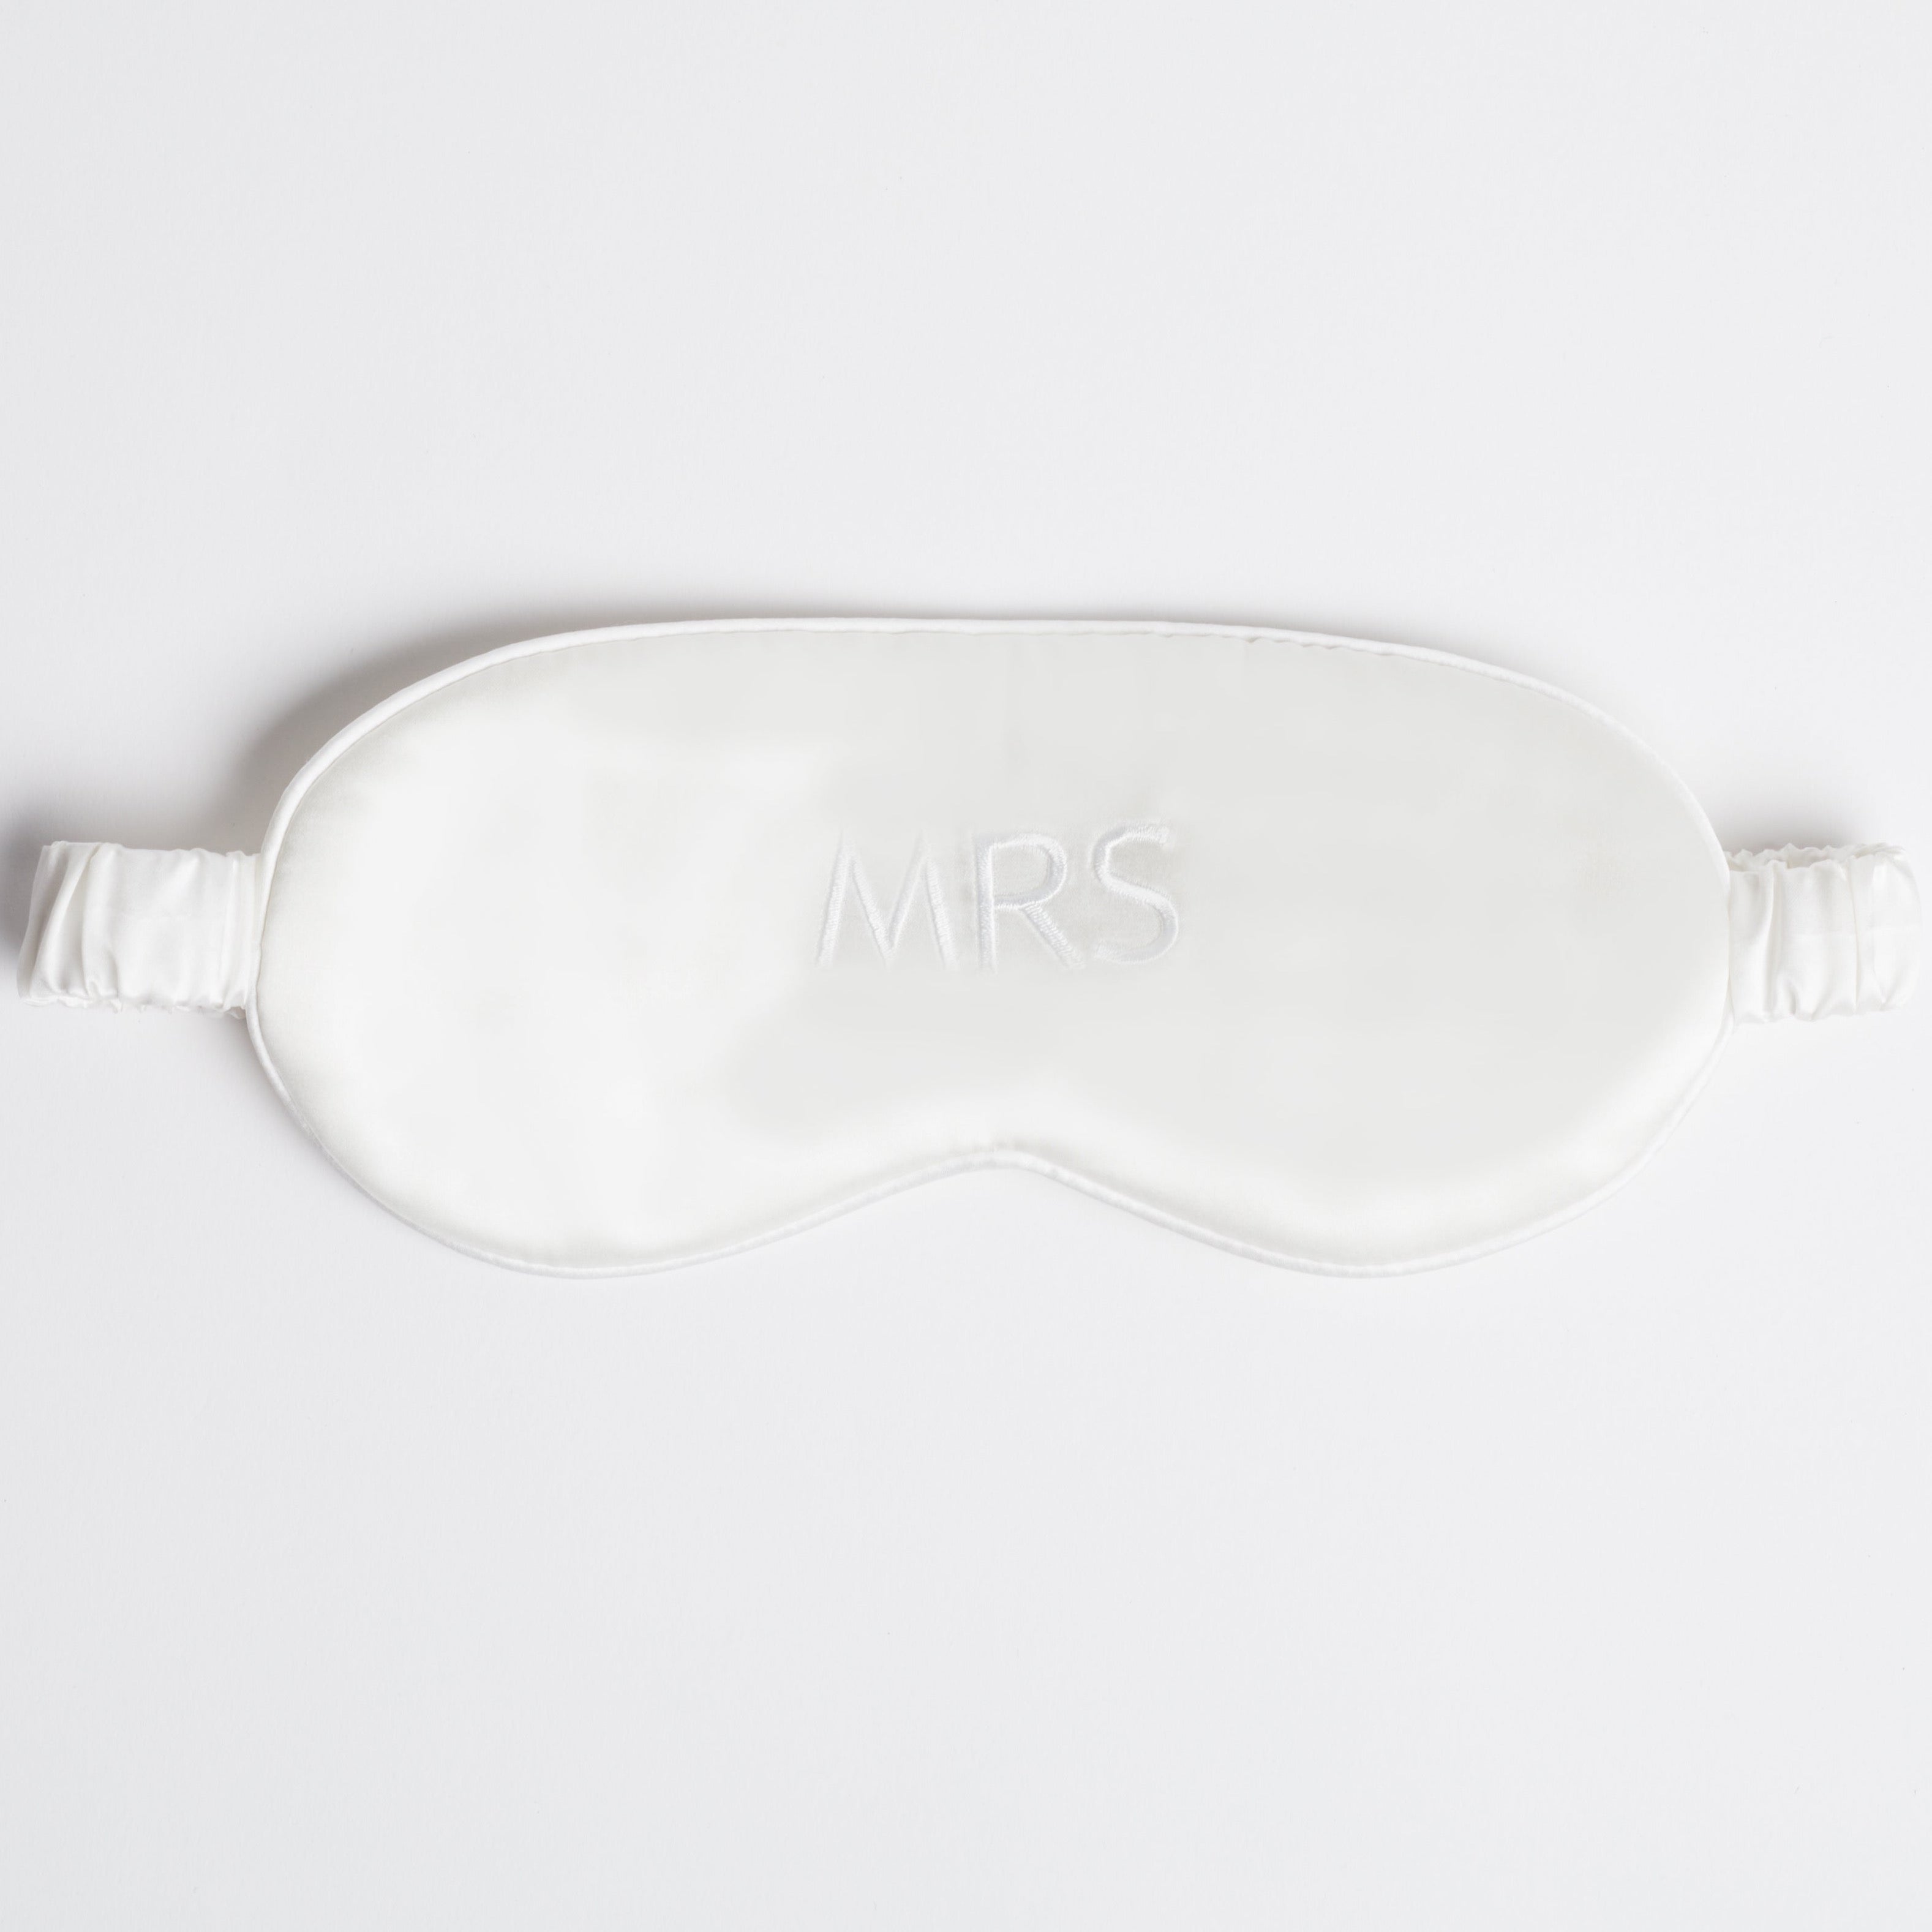 White silk eye mask with "MRS" written across it, lying on a white background.